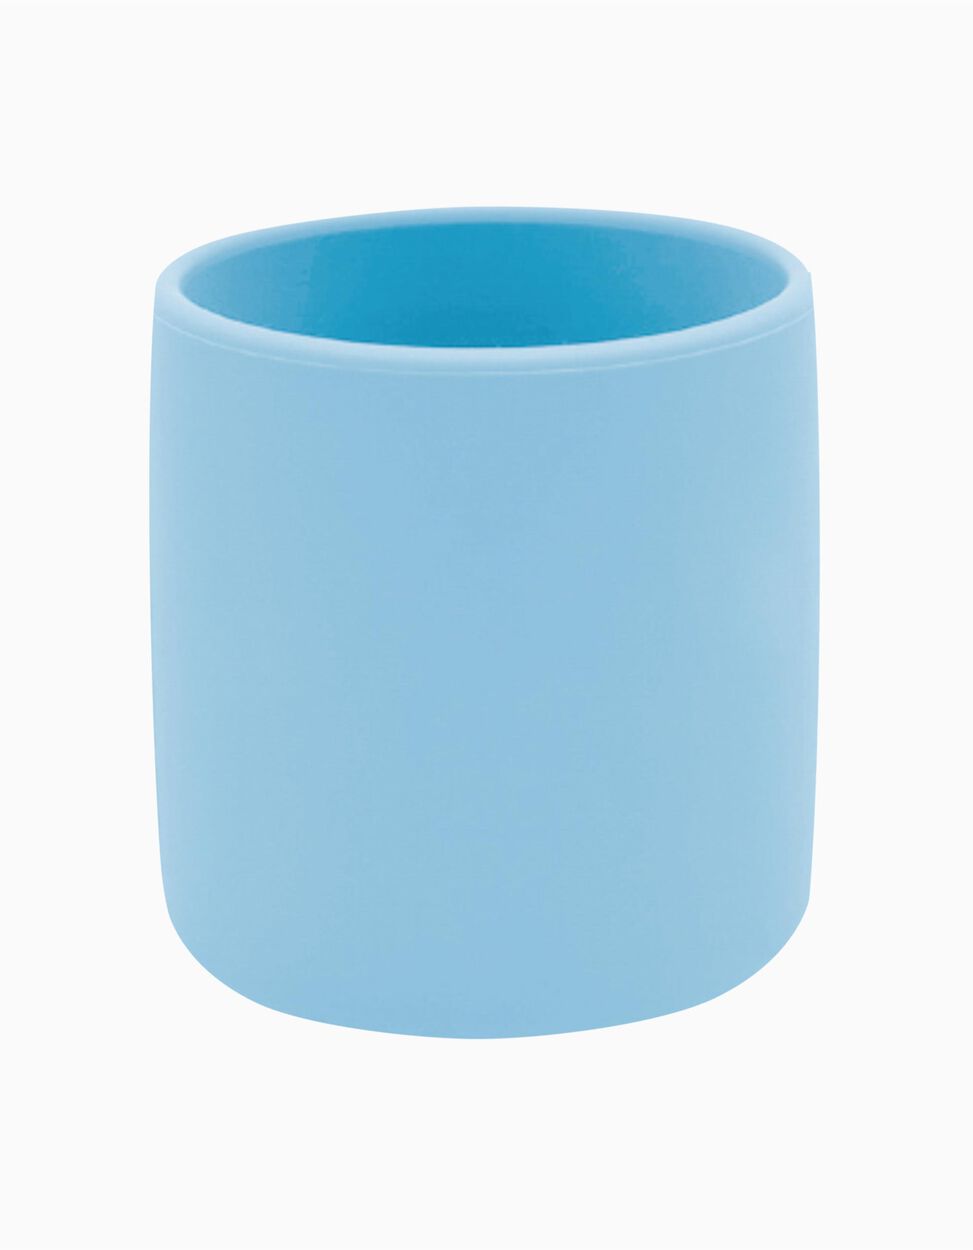 Mini Cup, Minikoioi, Blue 4M+